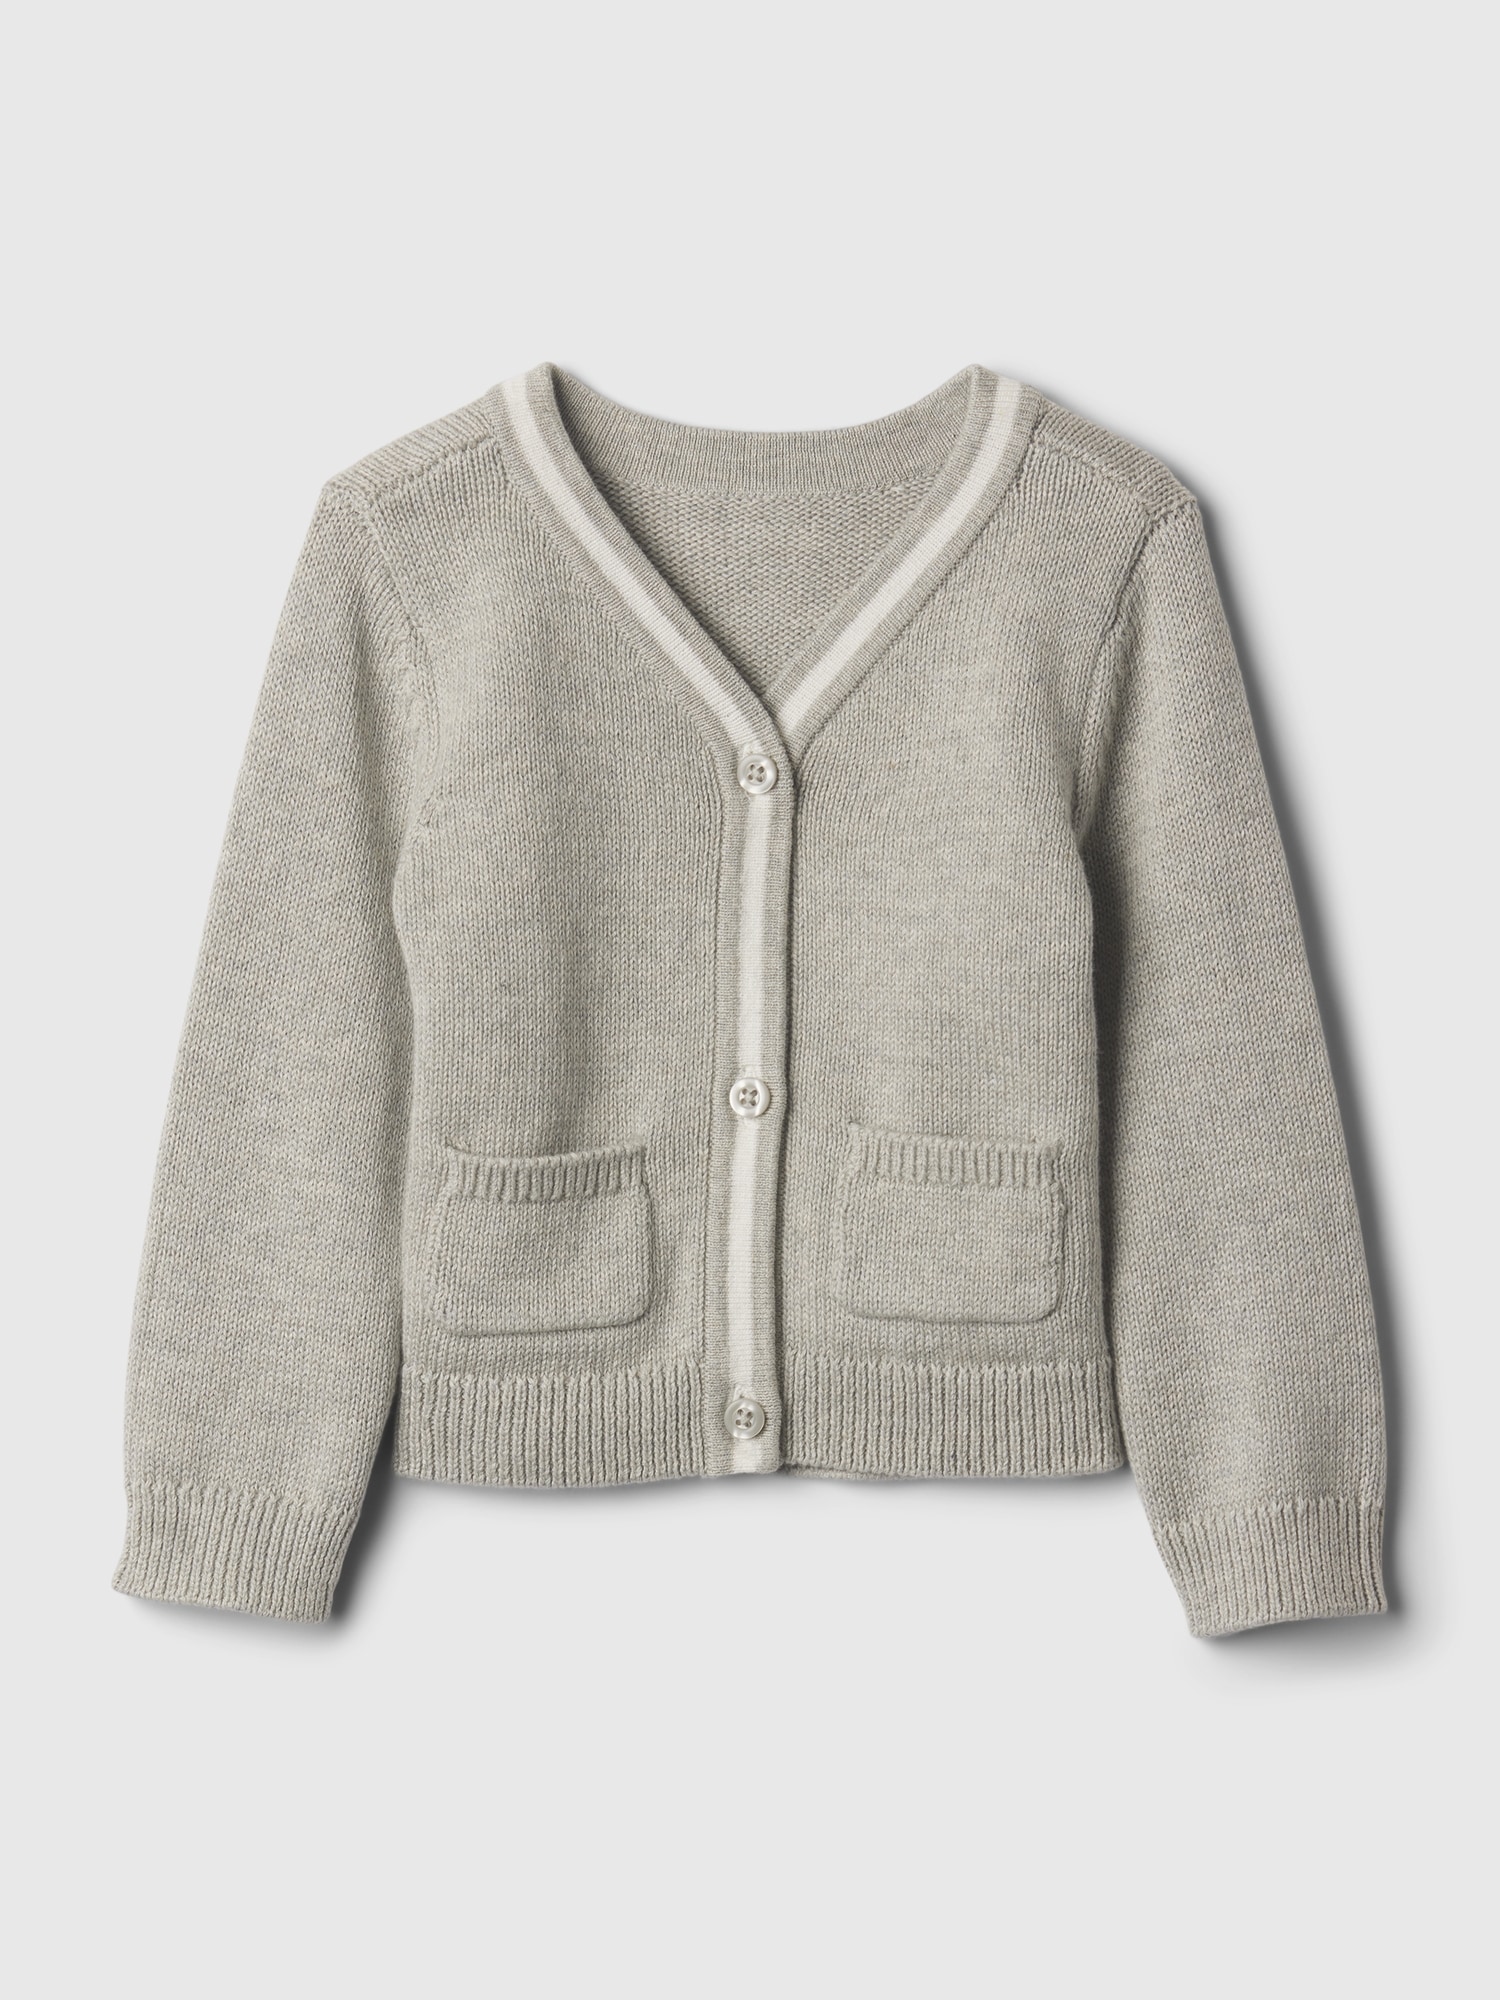 Baby Cardigan Sweater | Gap